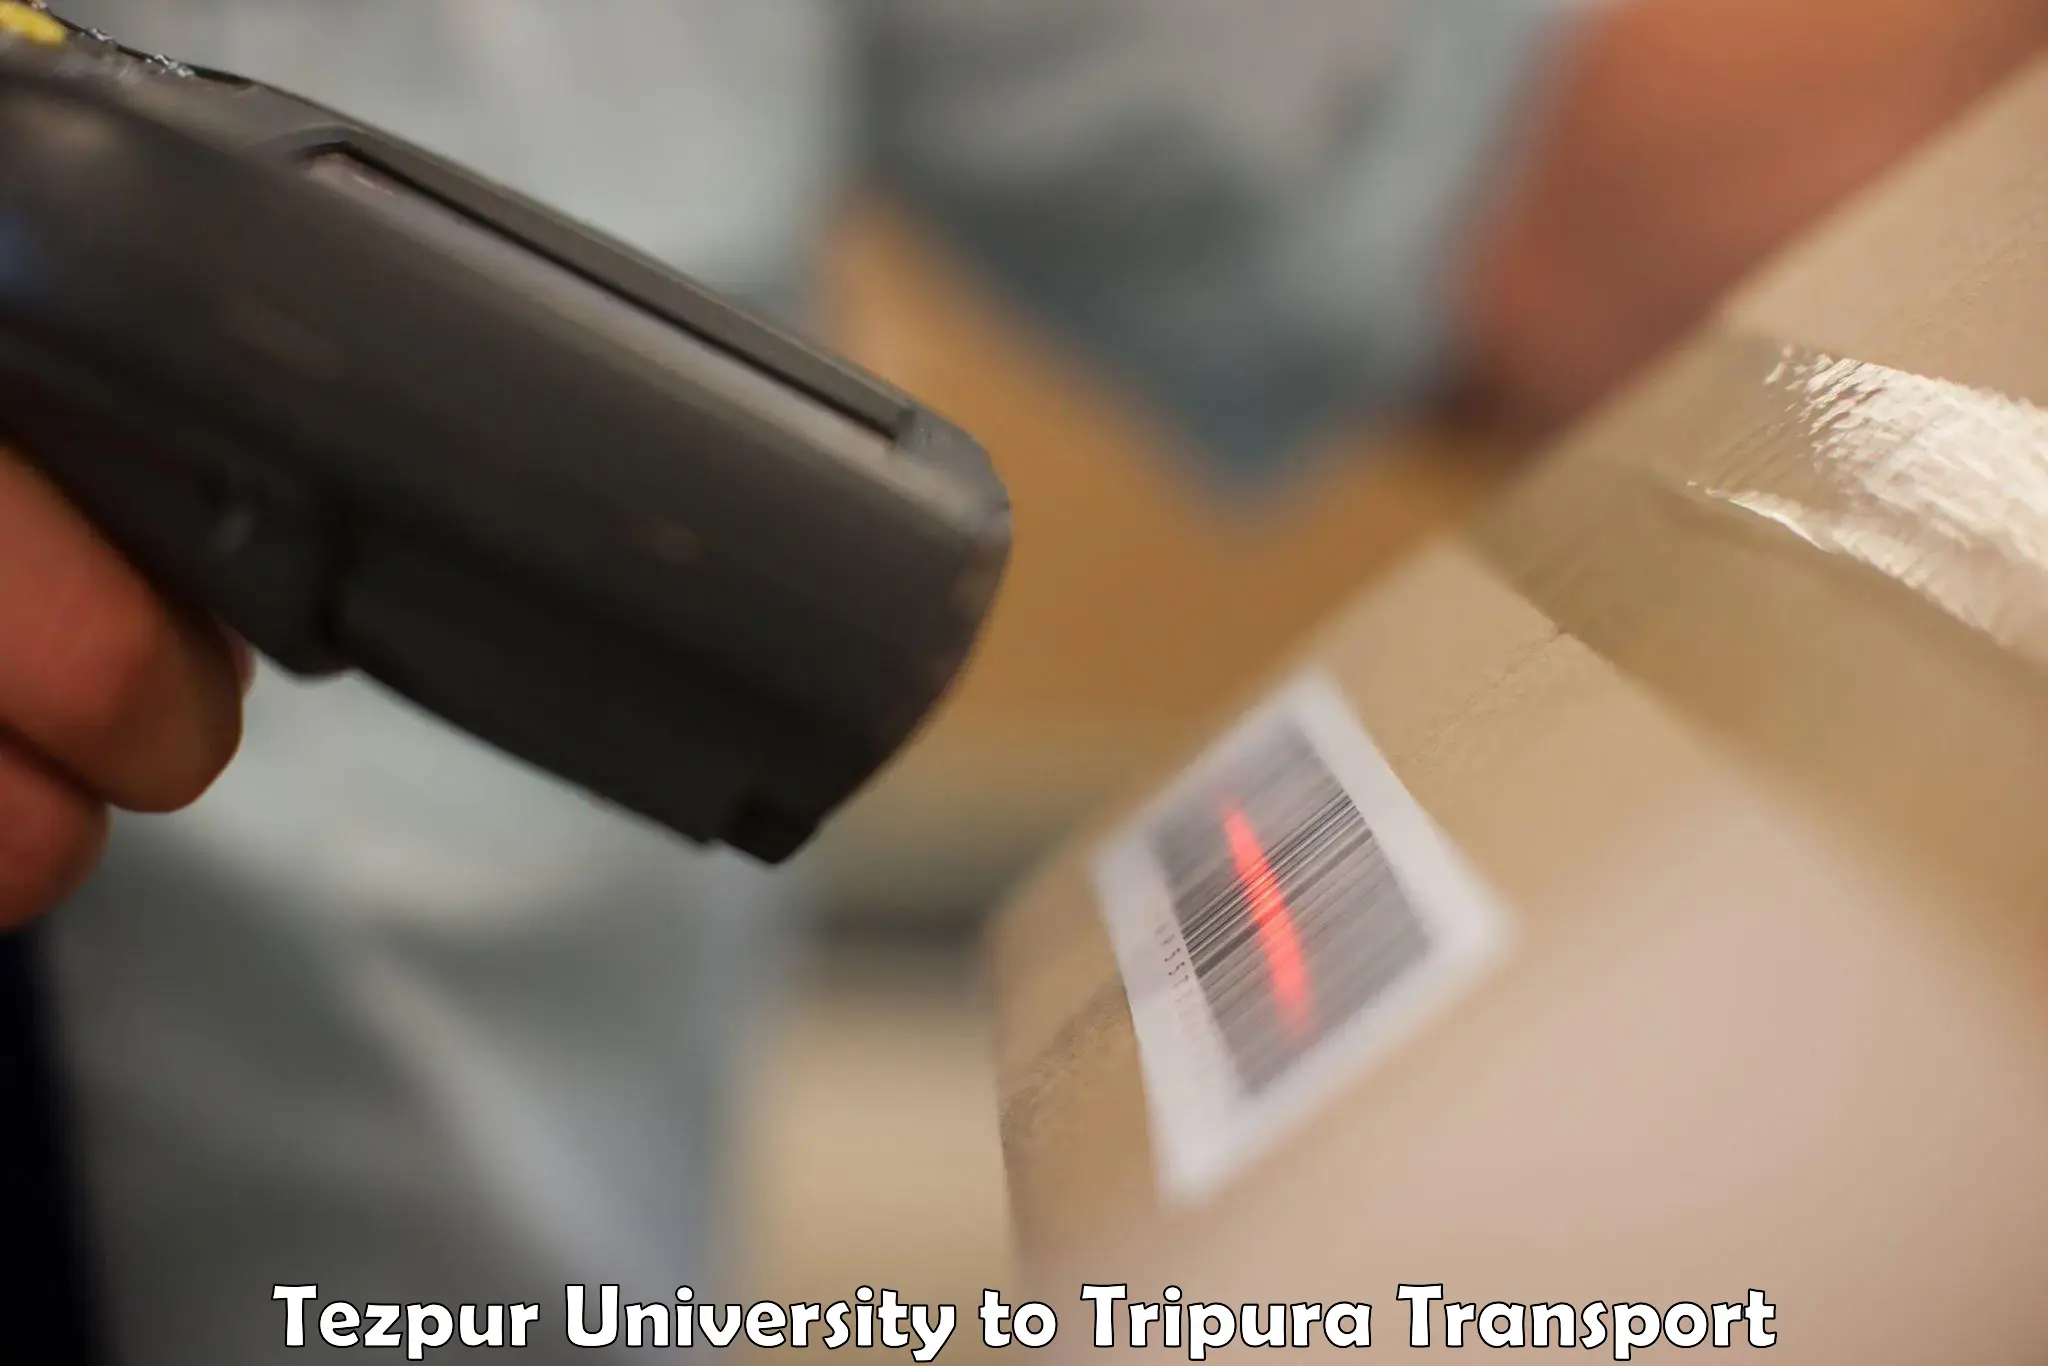 Delivery service Tezpur University to Amarpur